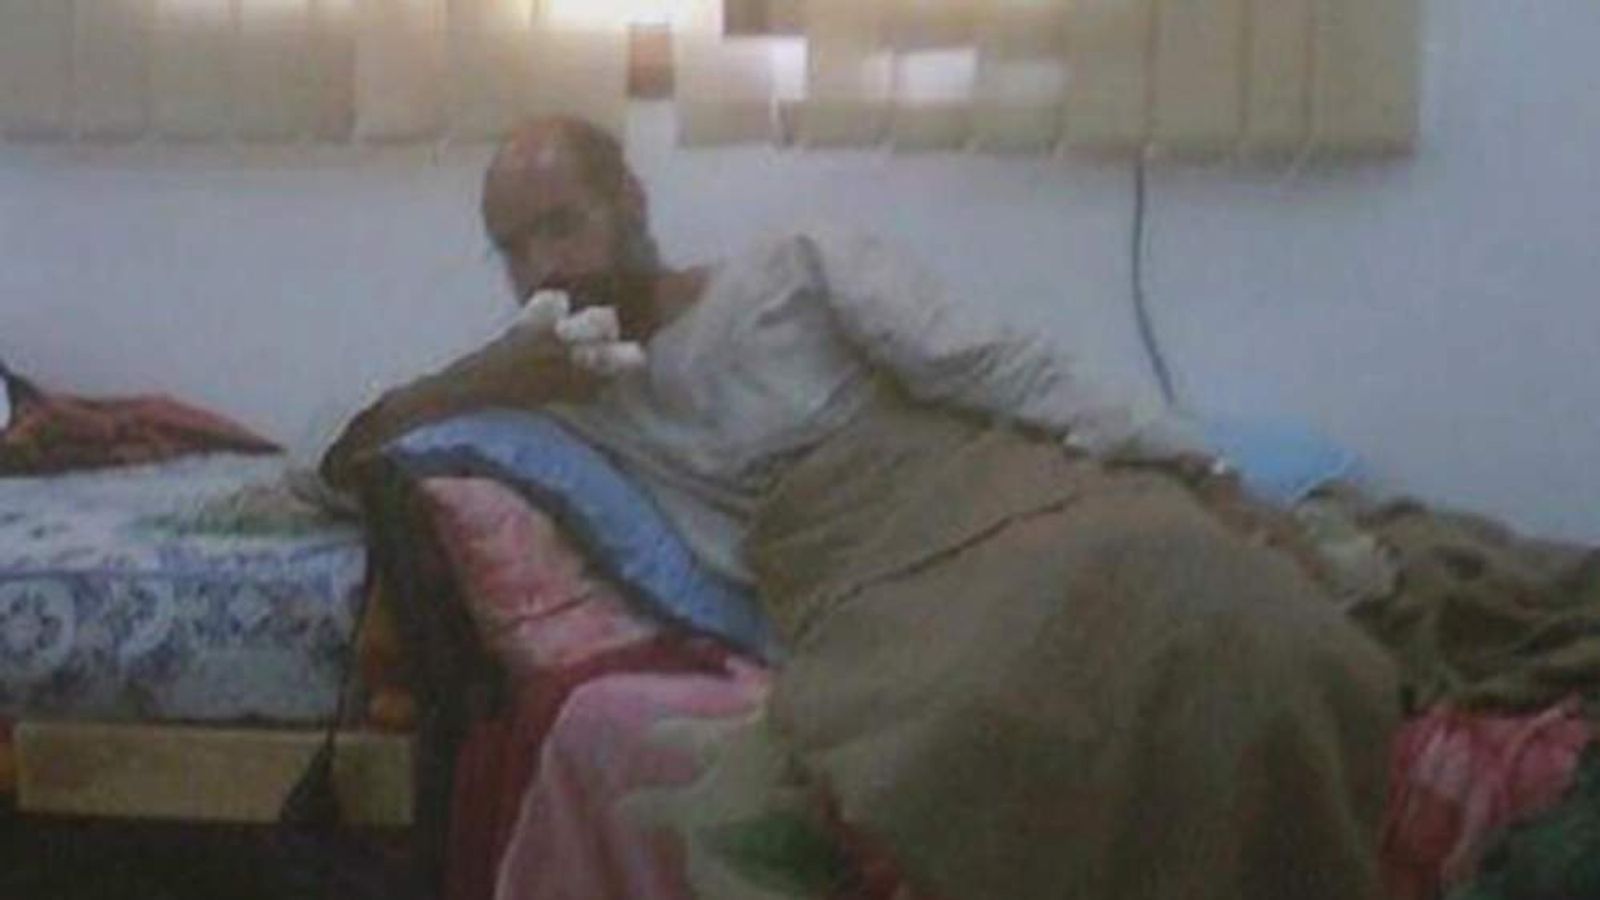 Saif Gaddafi S Injuries Turning Gangrenous World News Sky News